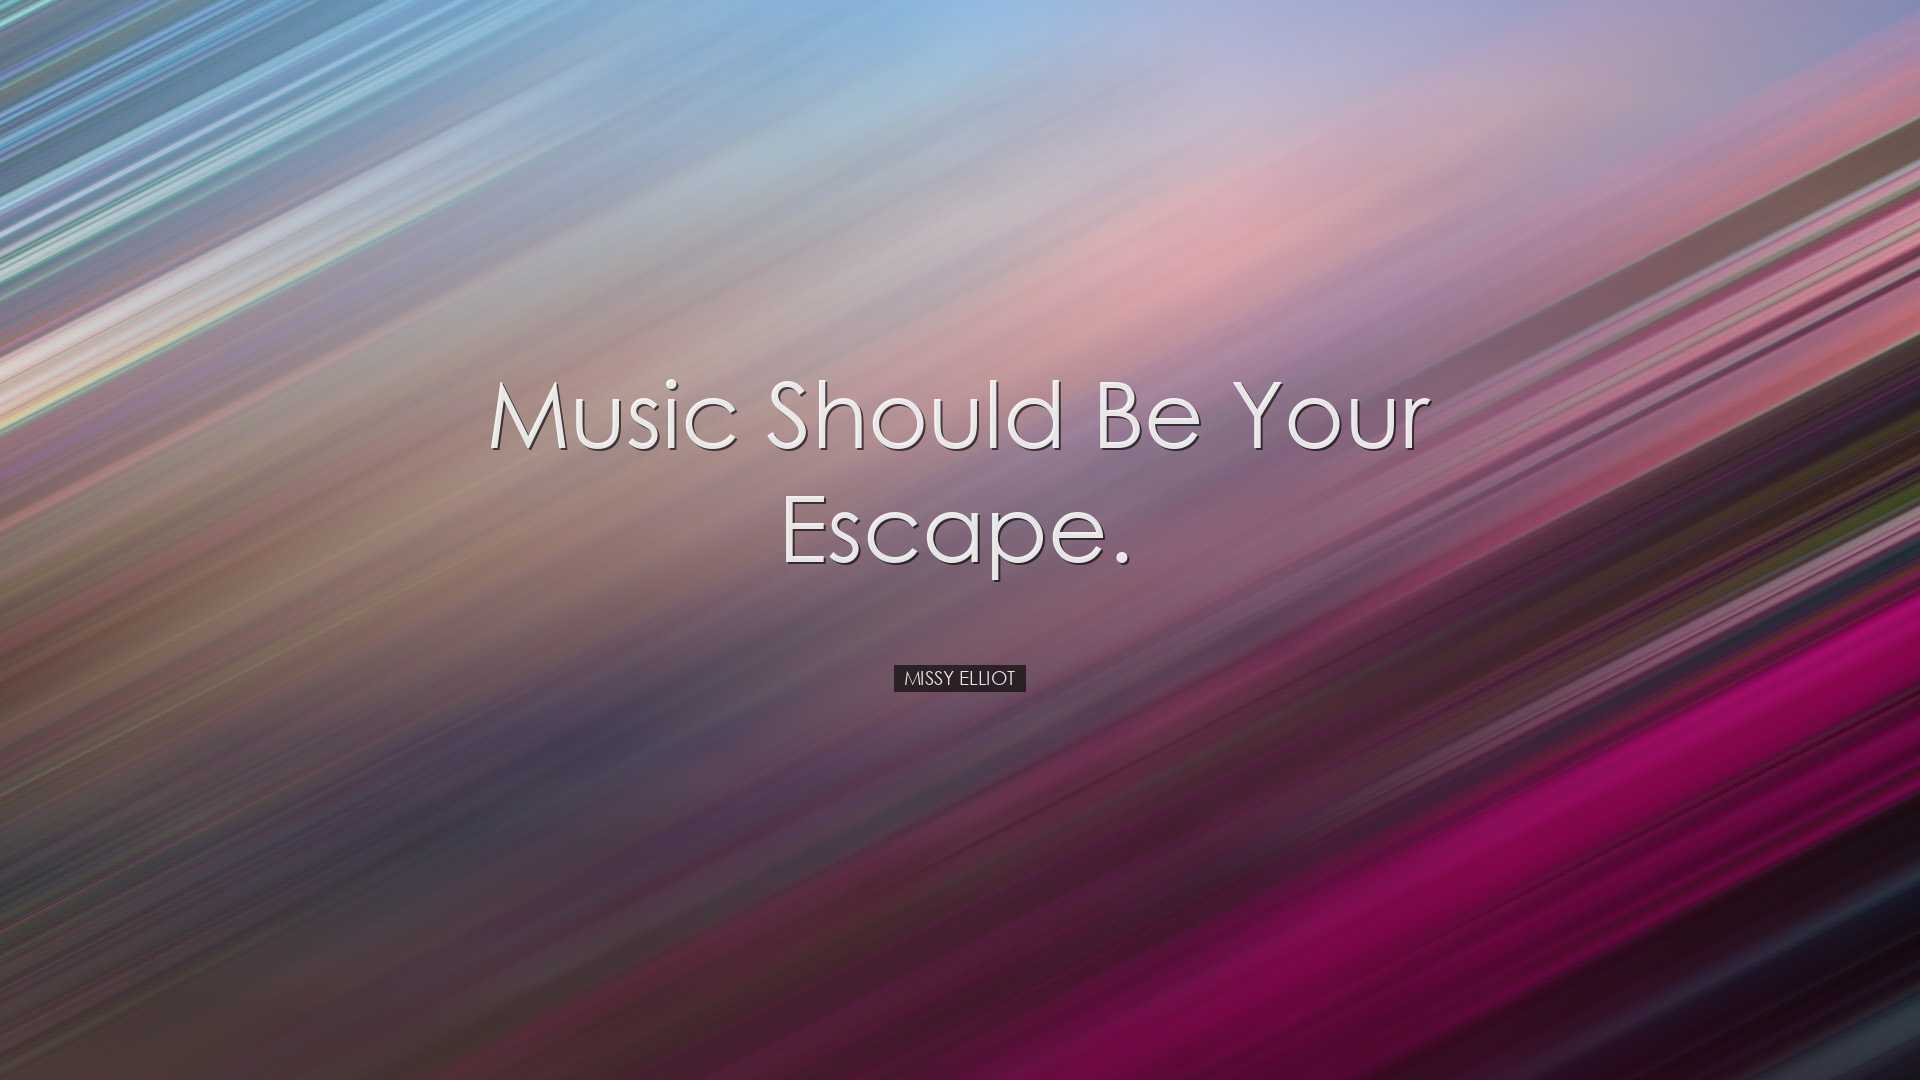 Music should be your escape. - Missy Elliot